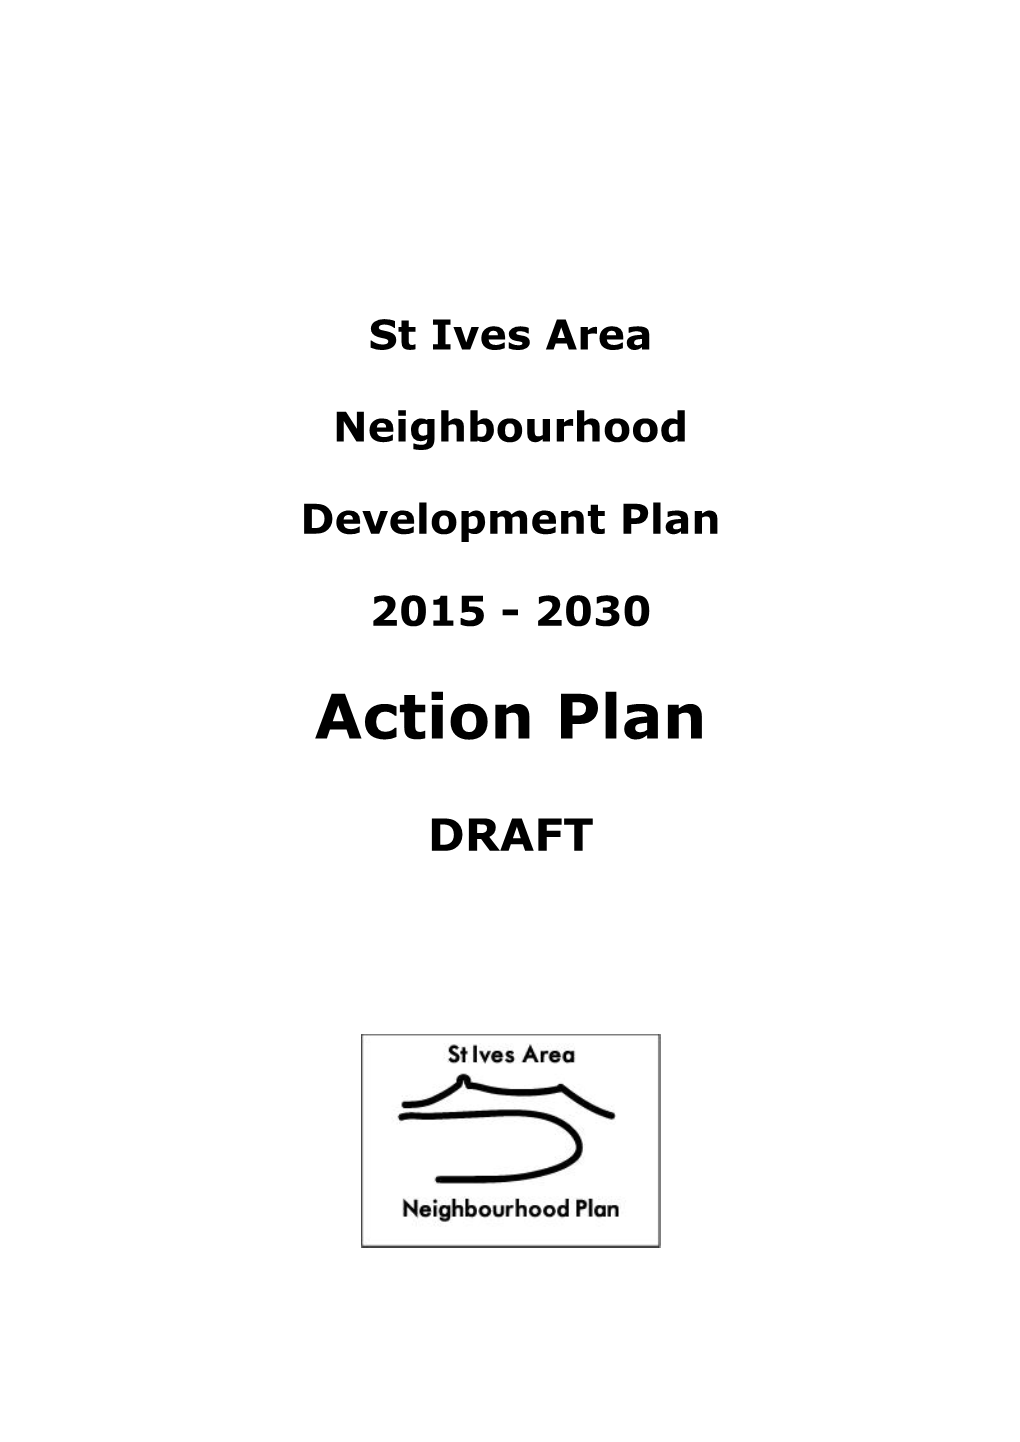 St Ives Area Action Plan Draft Nov14